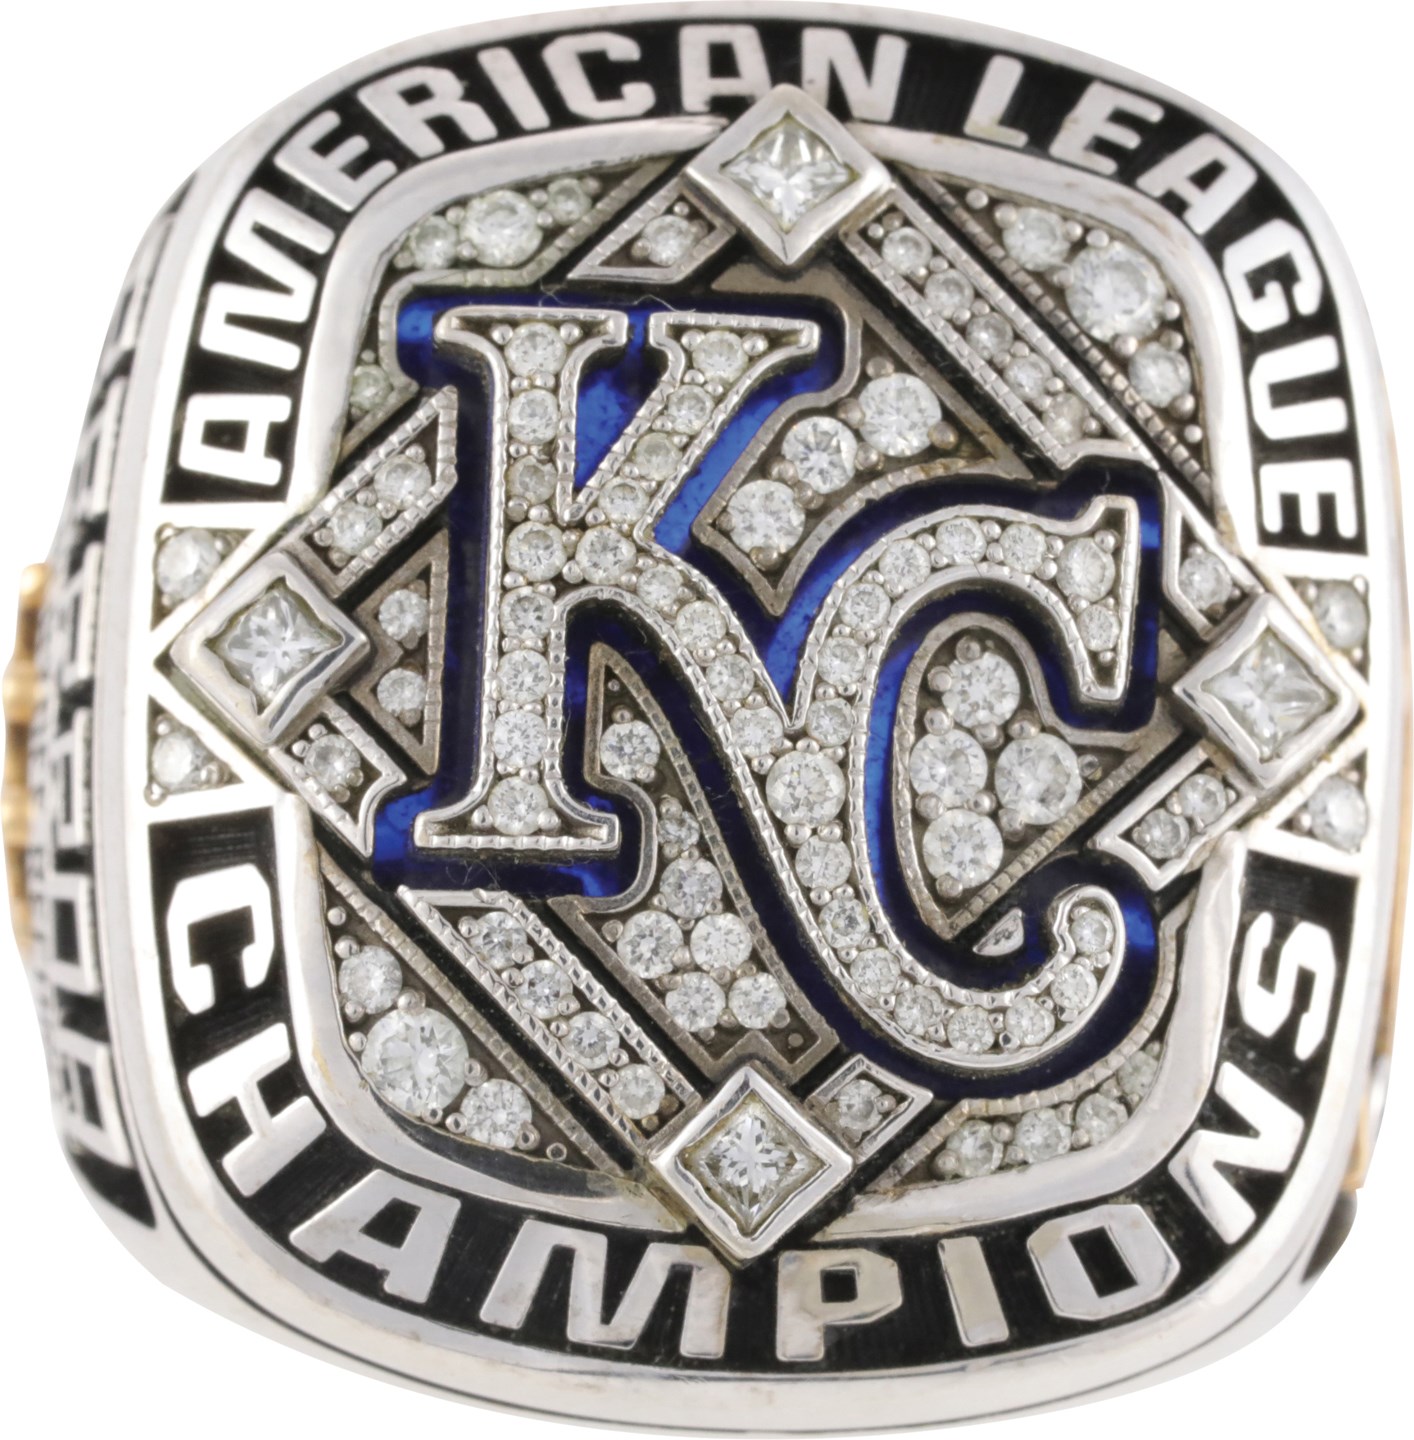 - 2014 Kanas City Royals American League Champions Ring (Berroa)